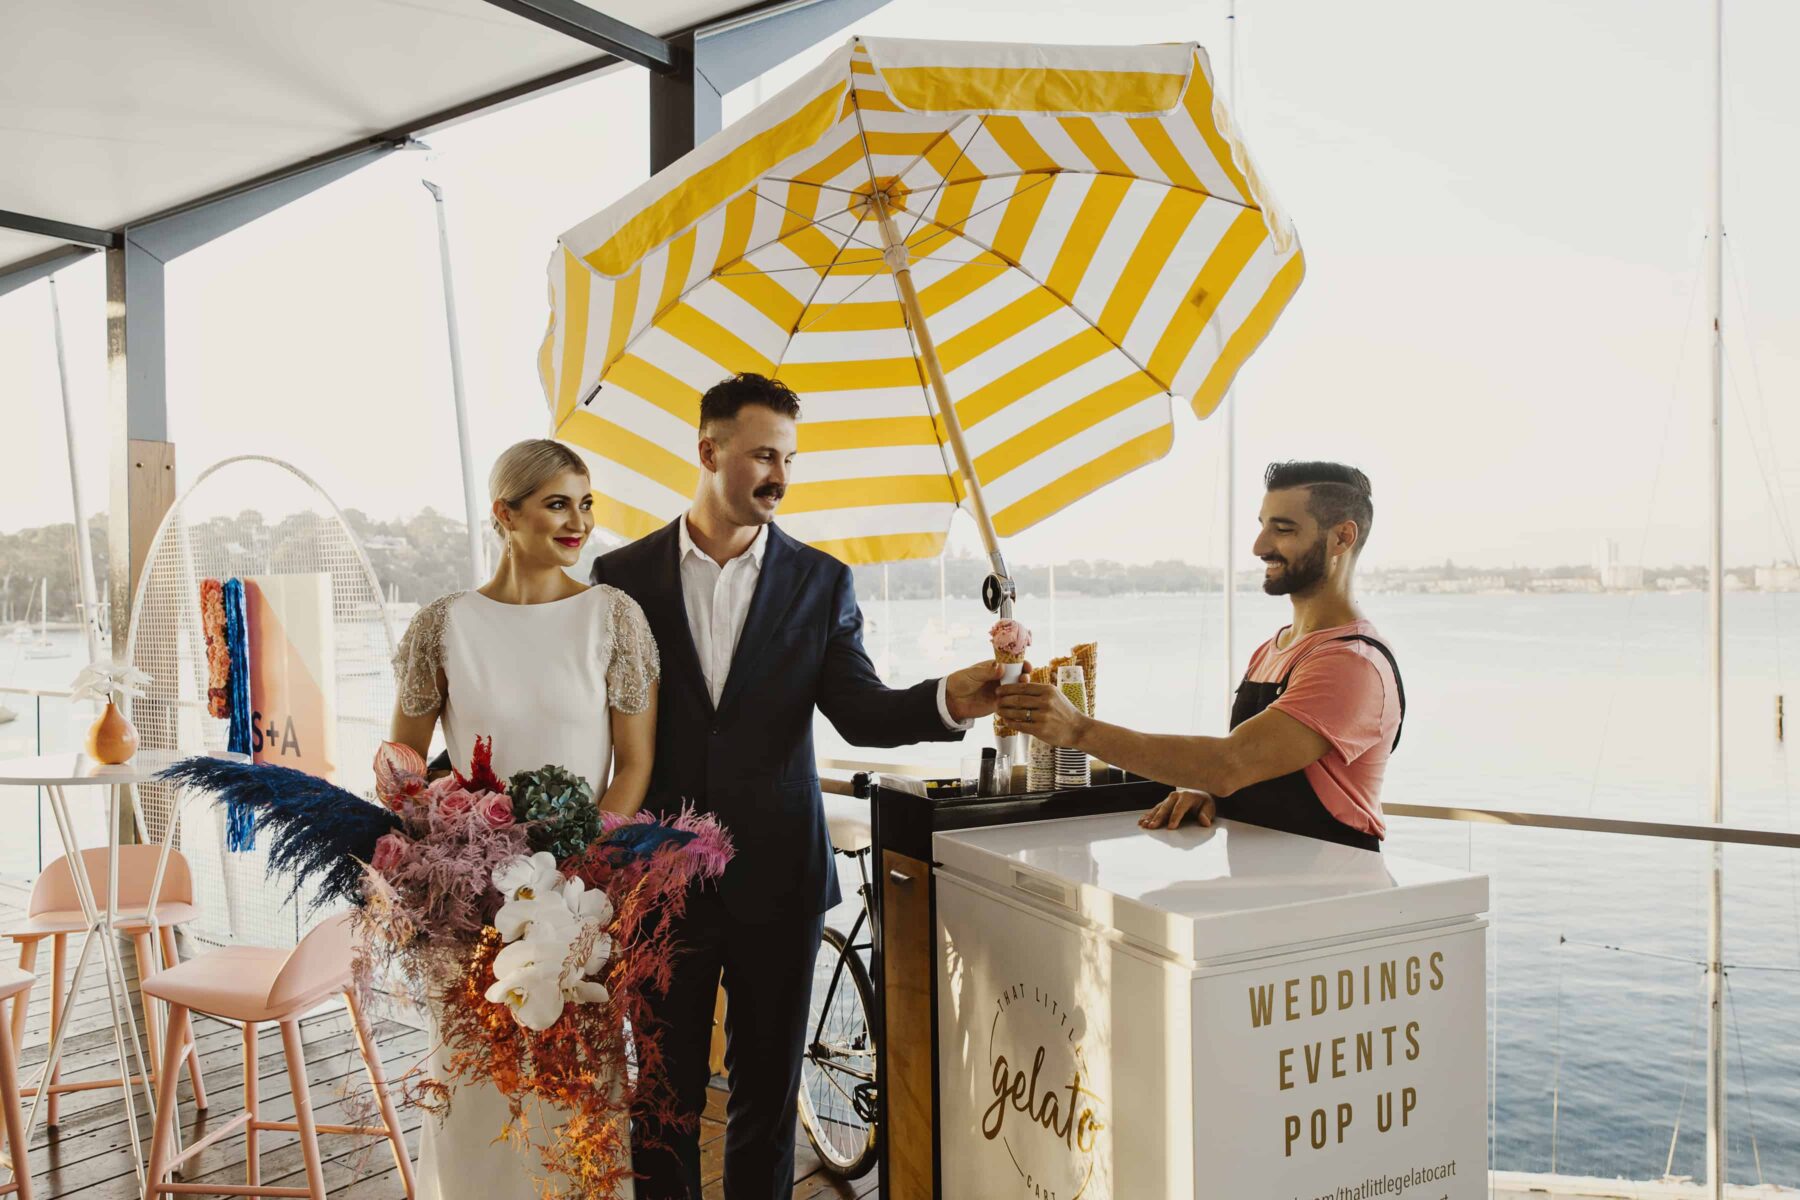 Perth wedding gelato cart